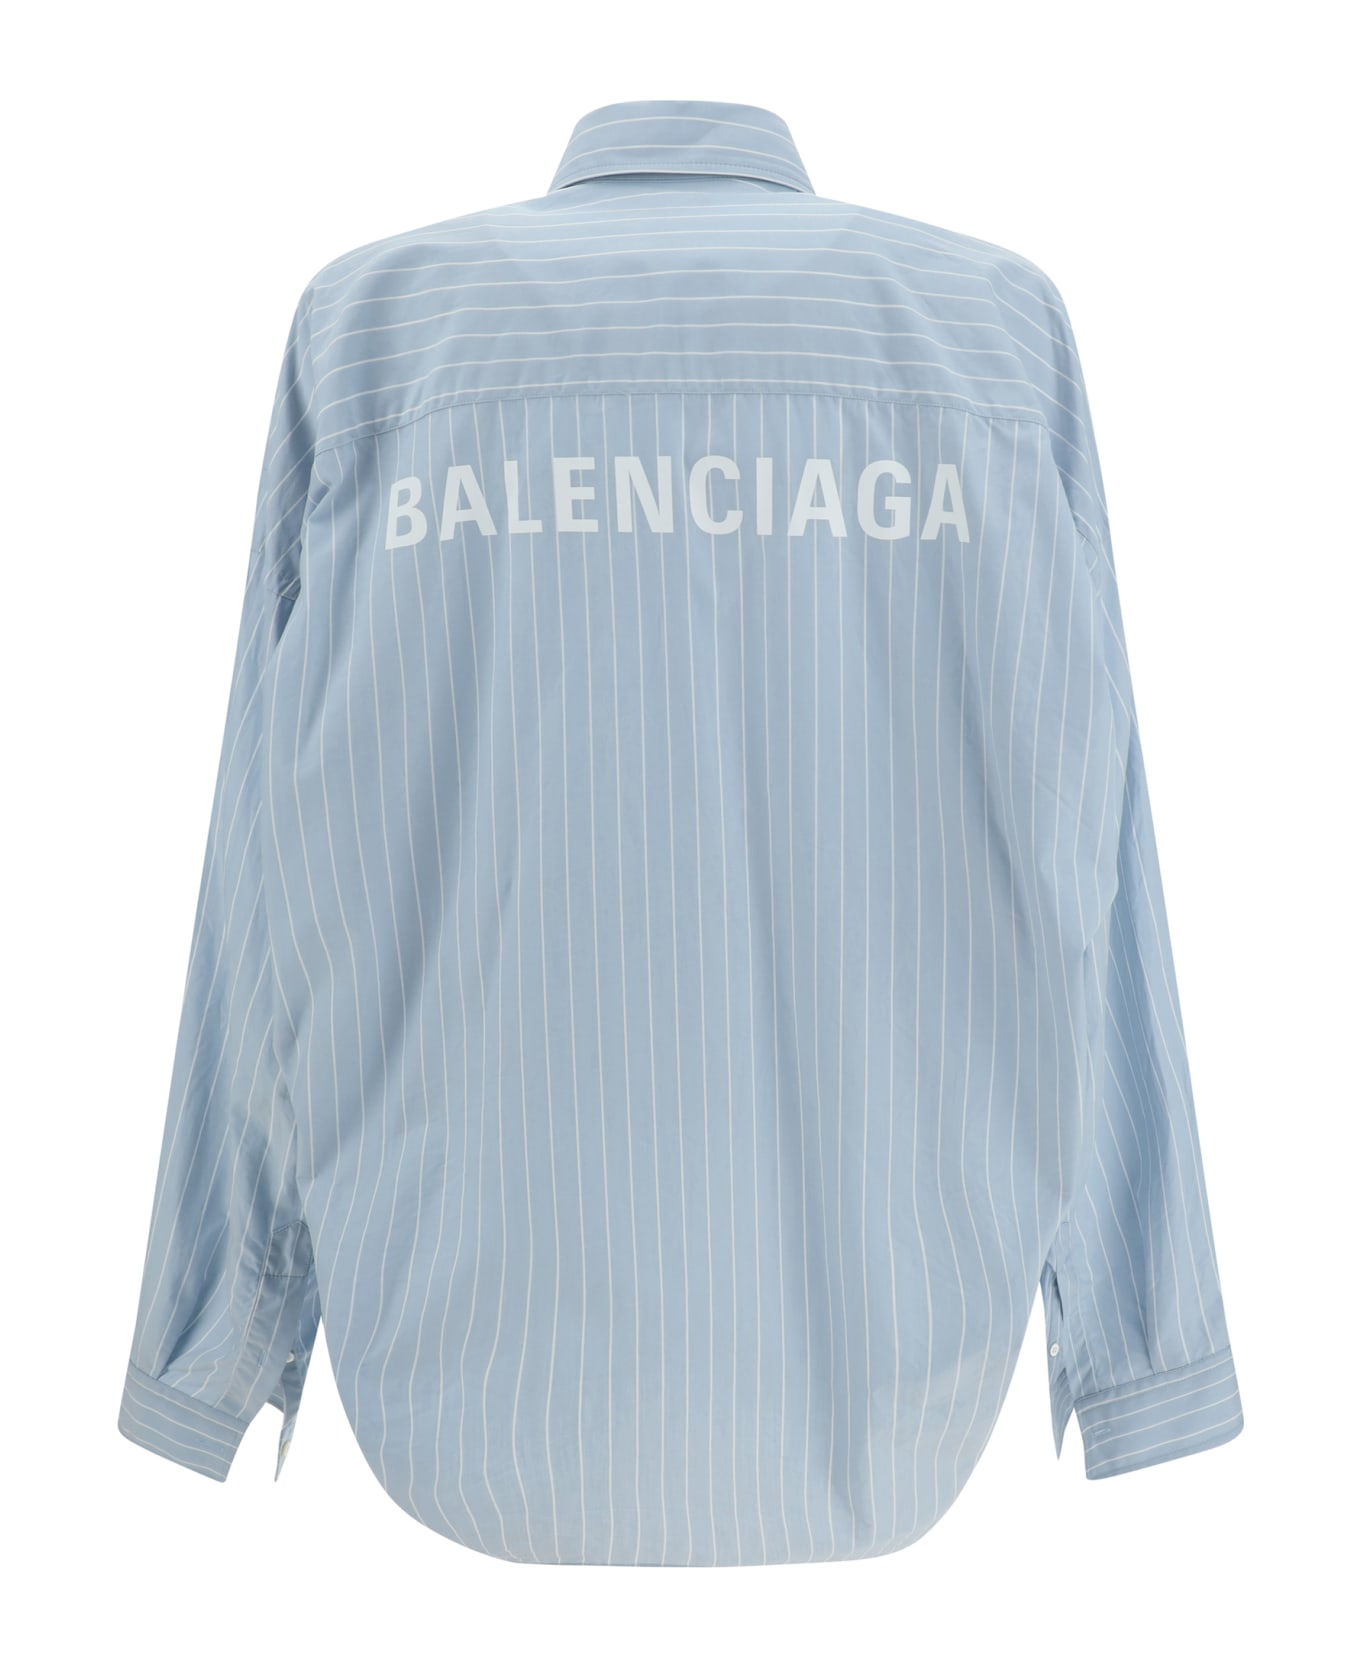 Balenciaga Cotton Shirt - Light Blue/white